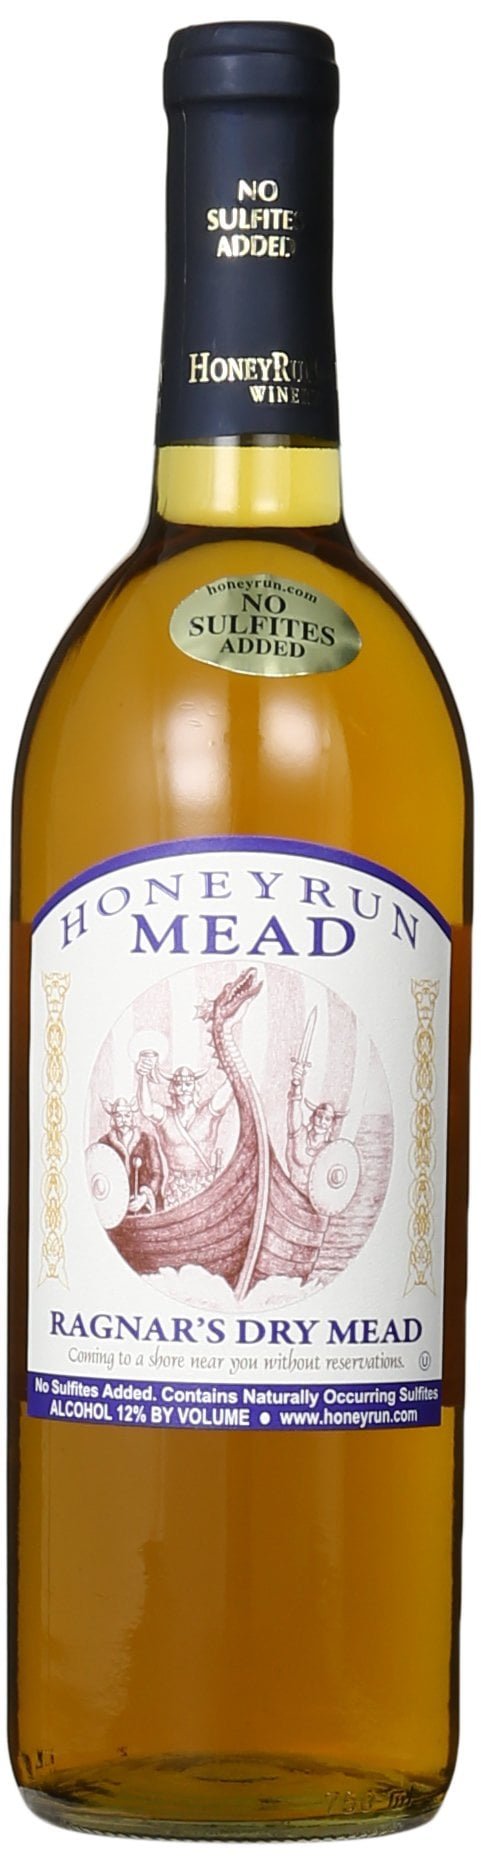 Honeyrun – Ragnar’s Dry Mead 750mL